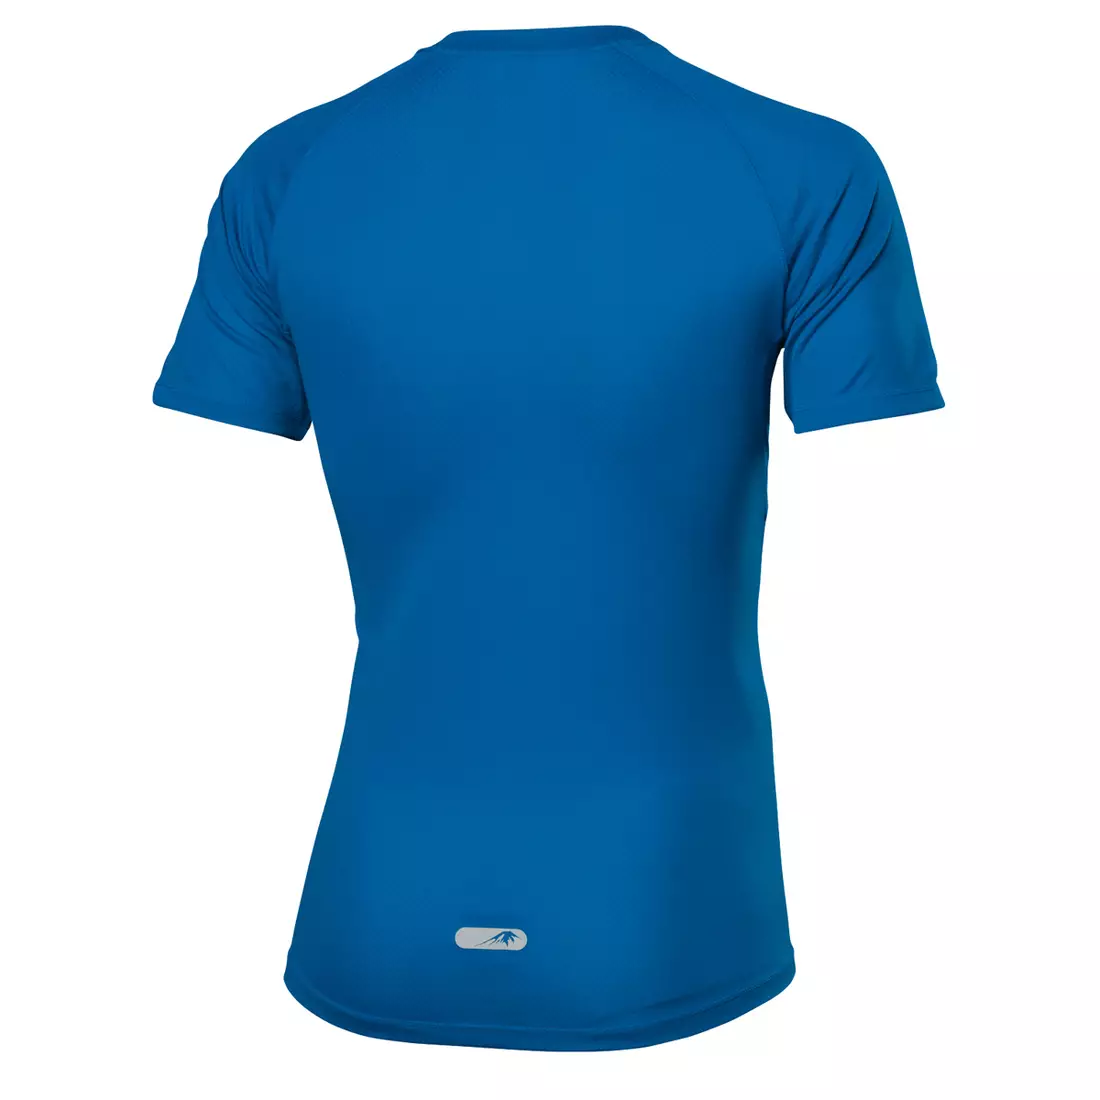 ASICS 110551-0861 FUJI GRAPHIC TOP - pánské běžecké tričko, barva: Modrá